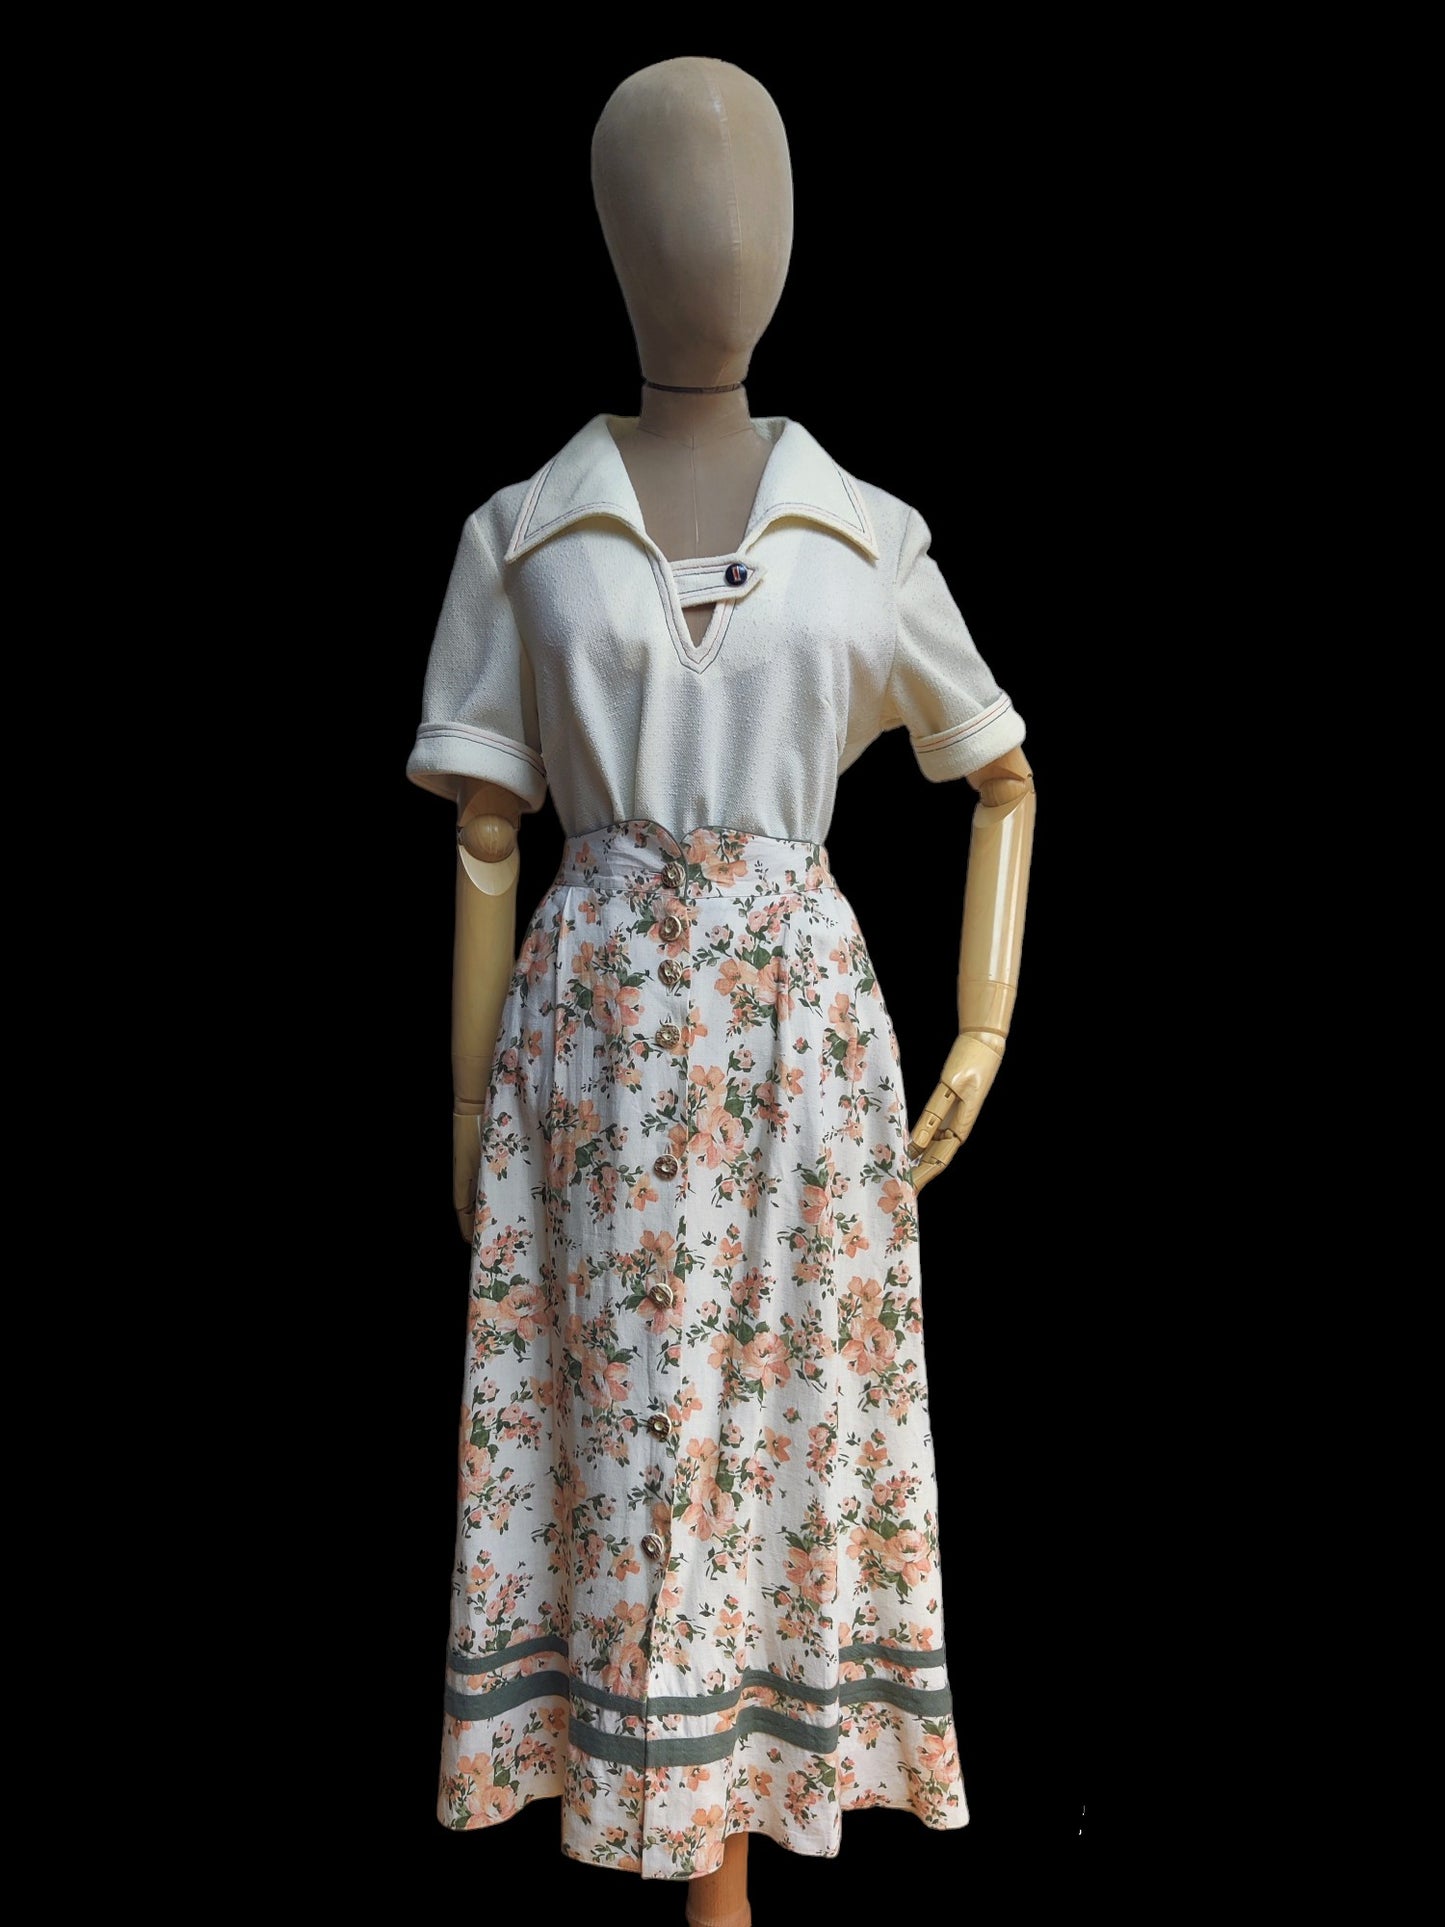 Stunning vintage floral midi skirt with floral print.